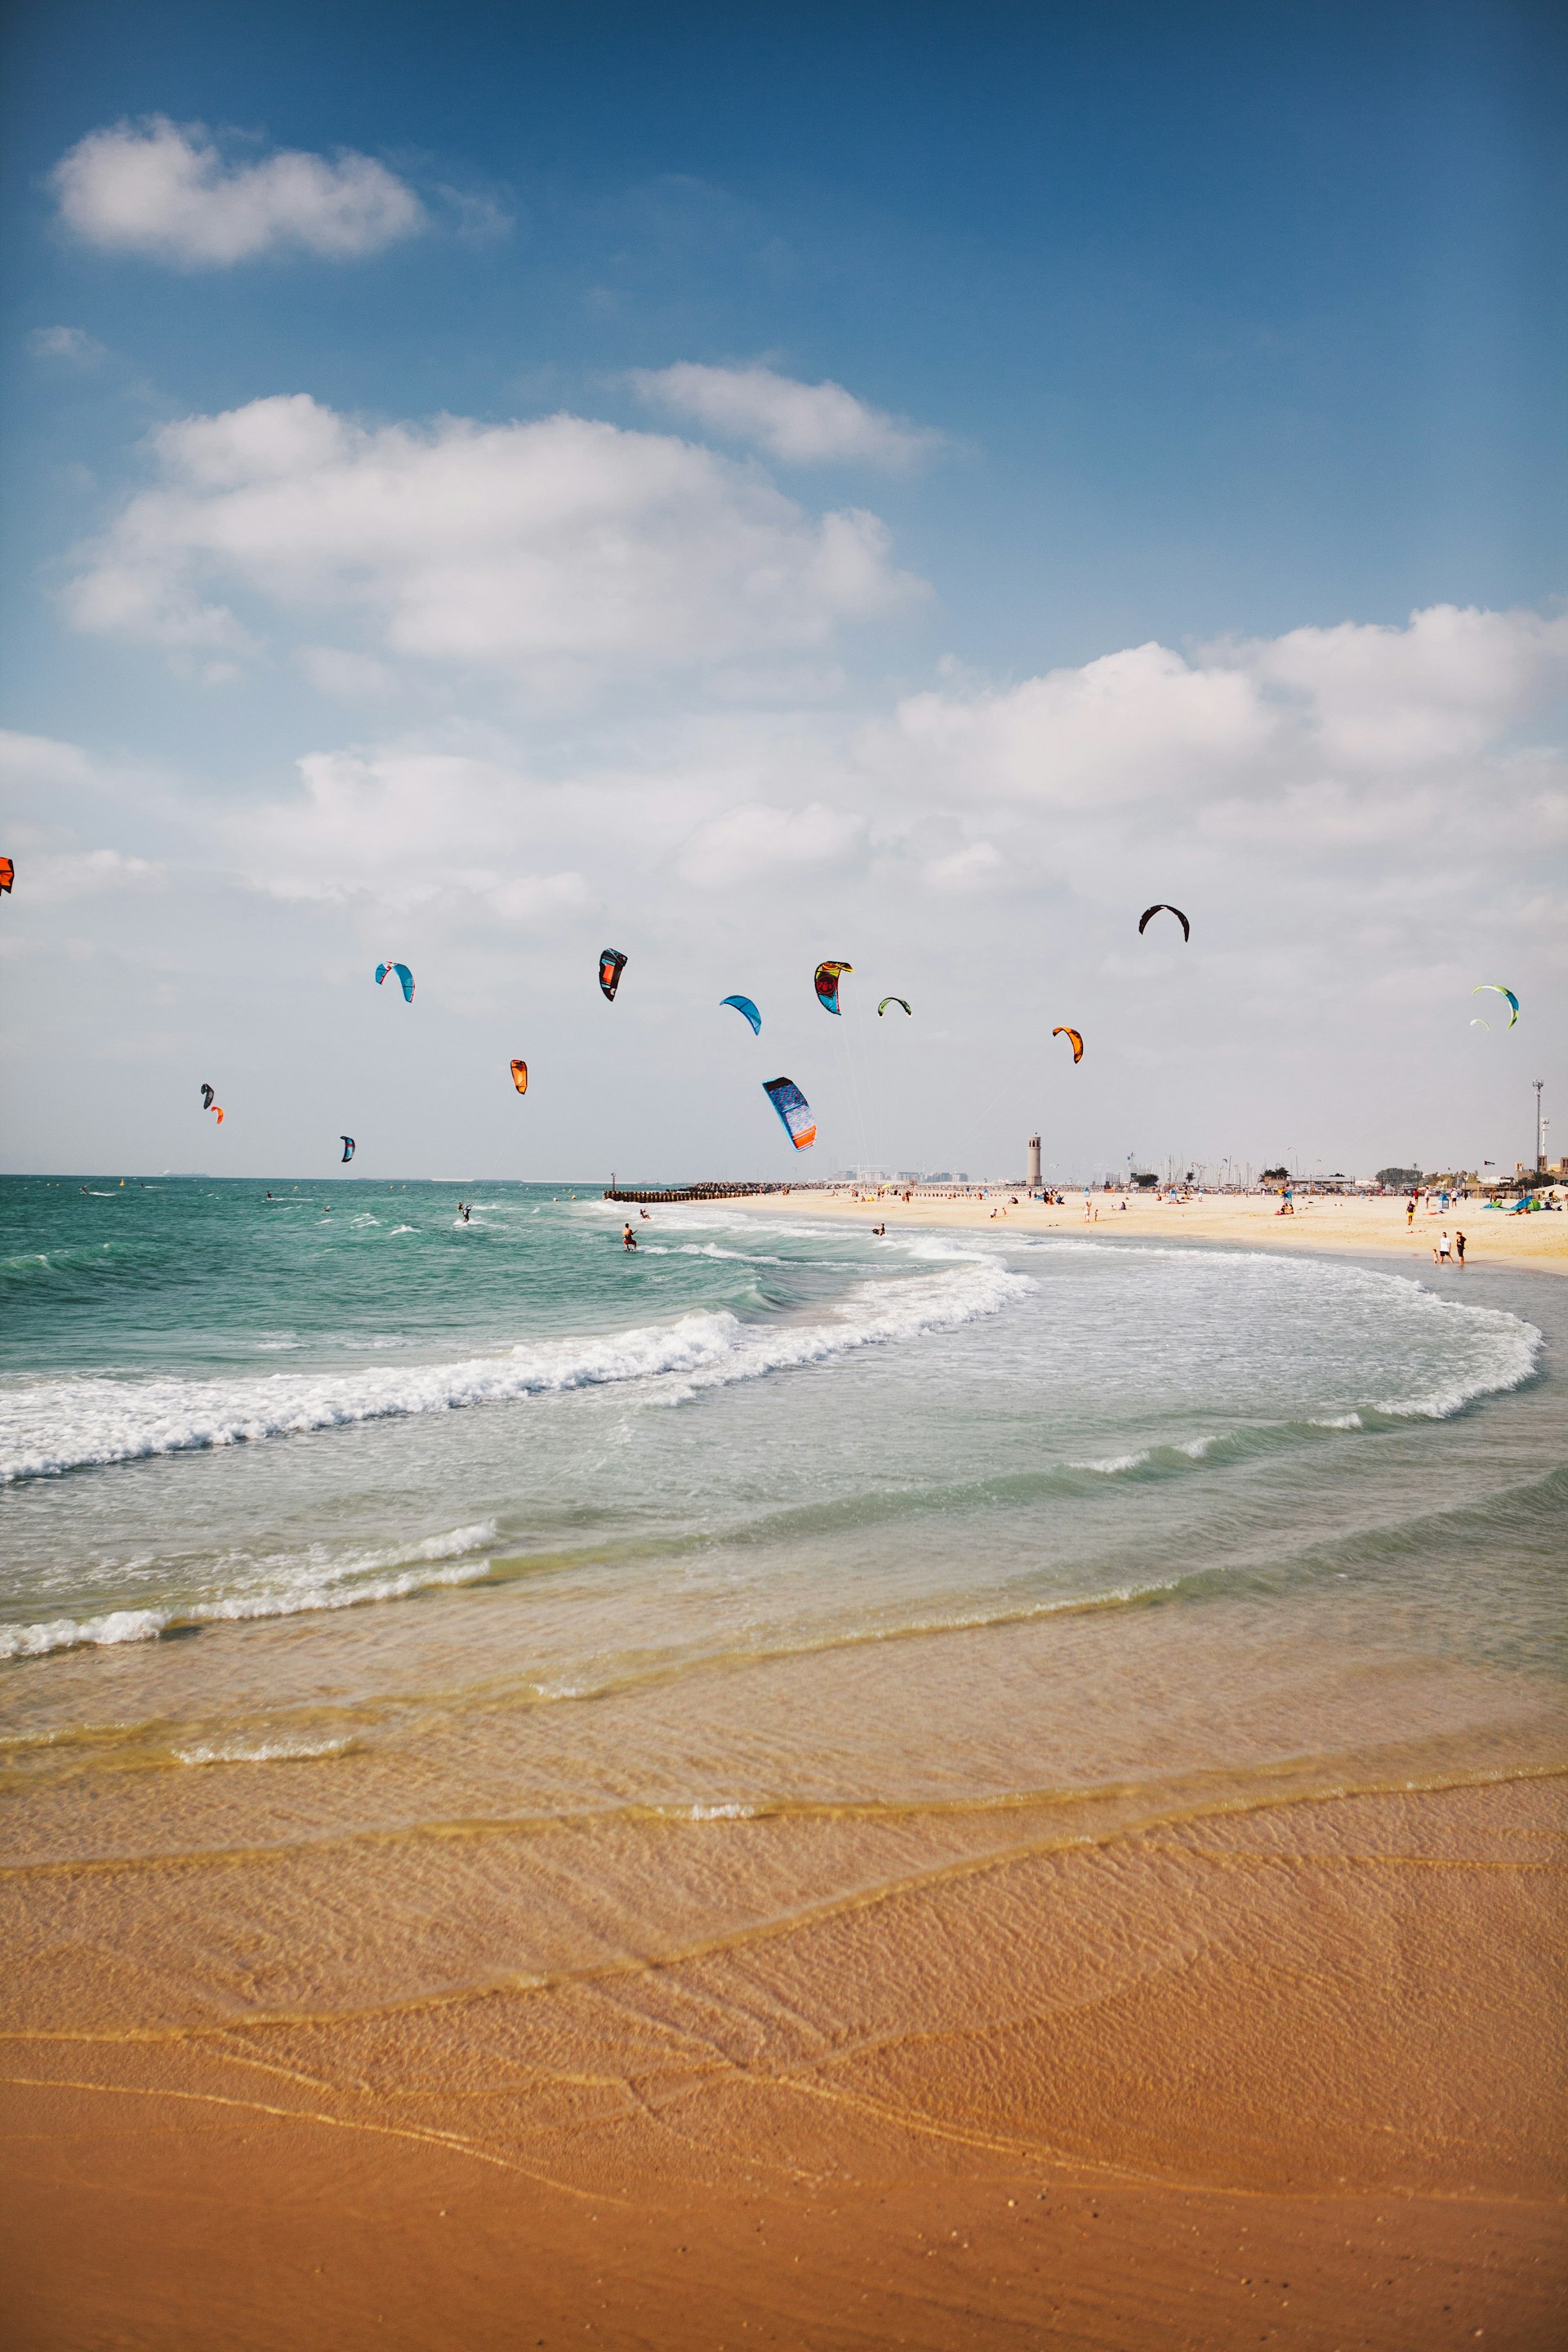 Kite surfing on Kite Beach in Dubai, United Arab Emirates